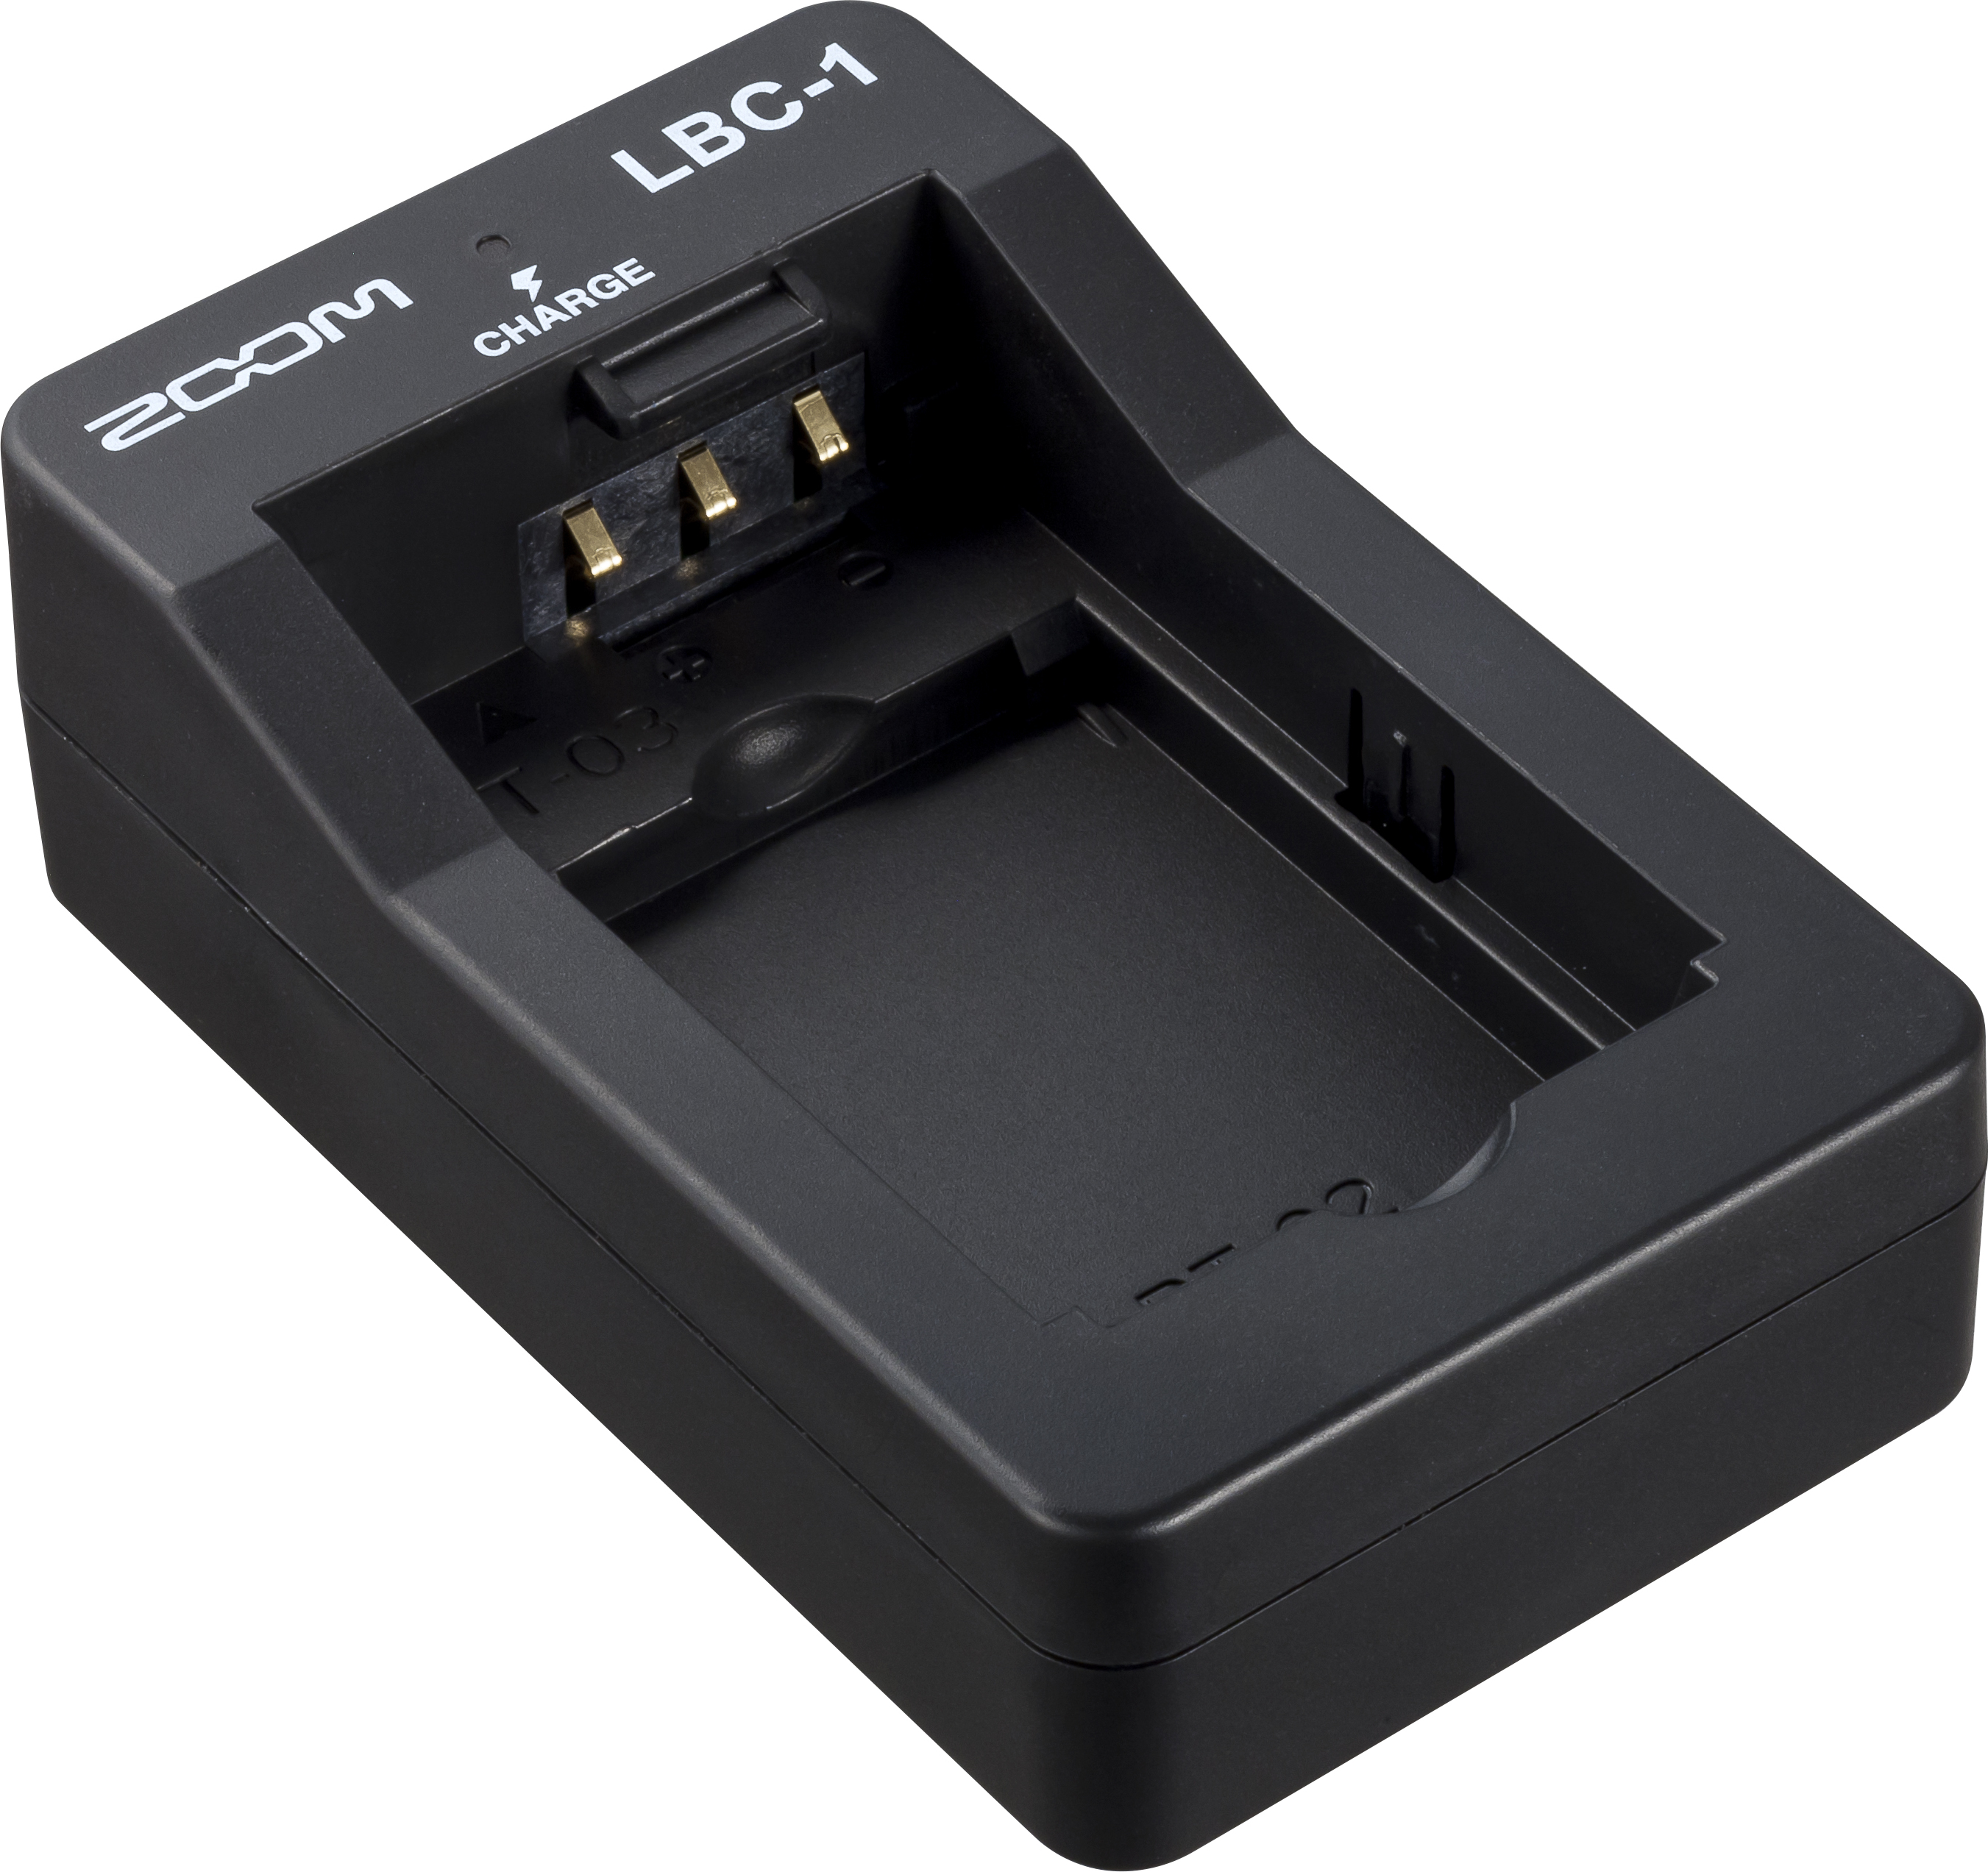 Zoom Lbc1 Chargeur Batterie Q8 - Battery charger - Main picture